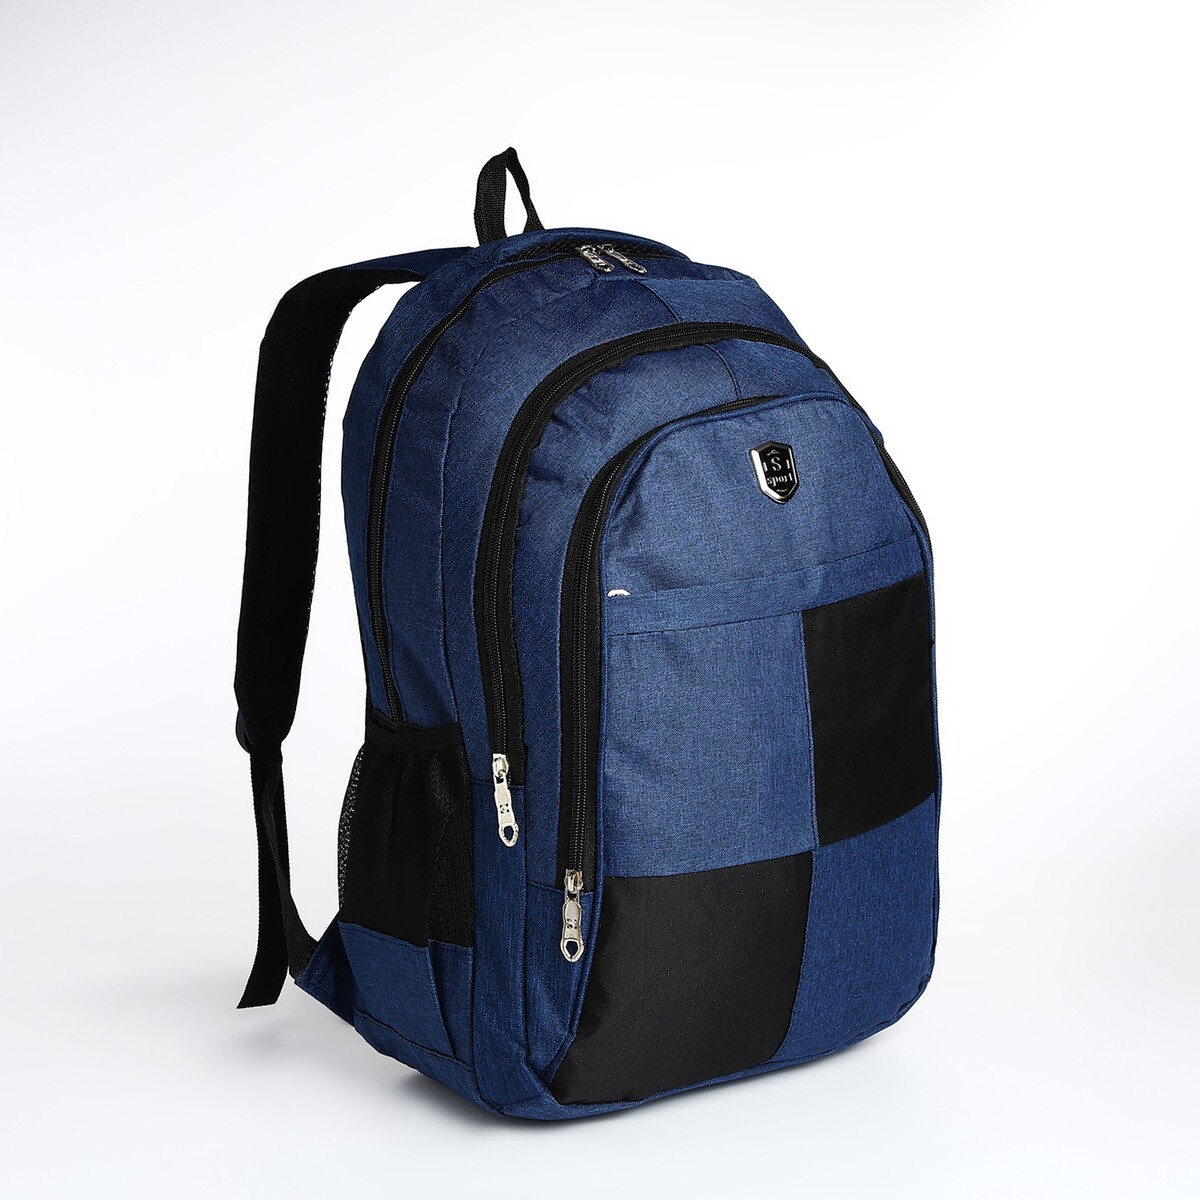 Рюкзак молодежный из текстиля, 2 отдела, 4 кармана, цвет синий рюкзак молодежный из текстиля 2 отдела на молниях 3 кармана синий